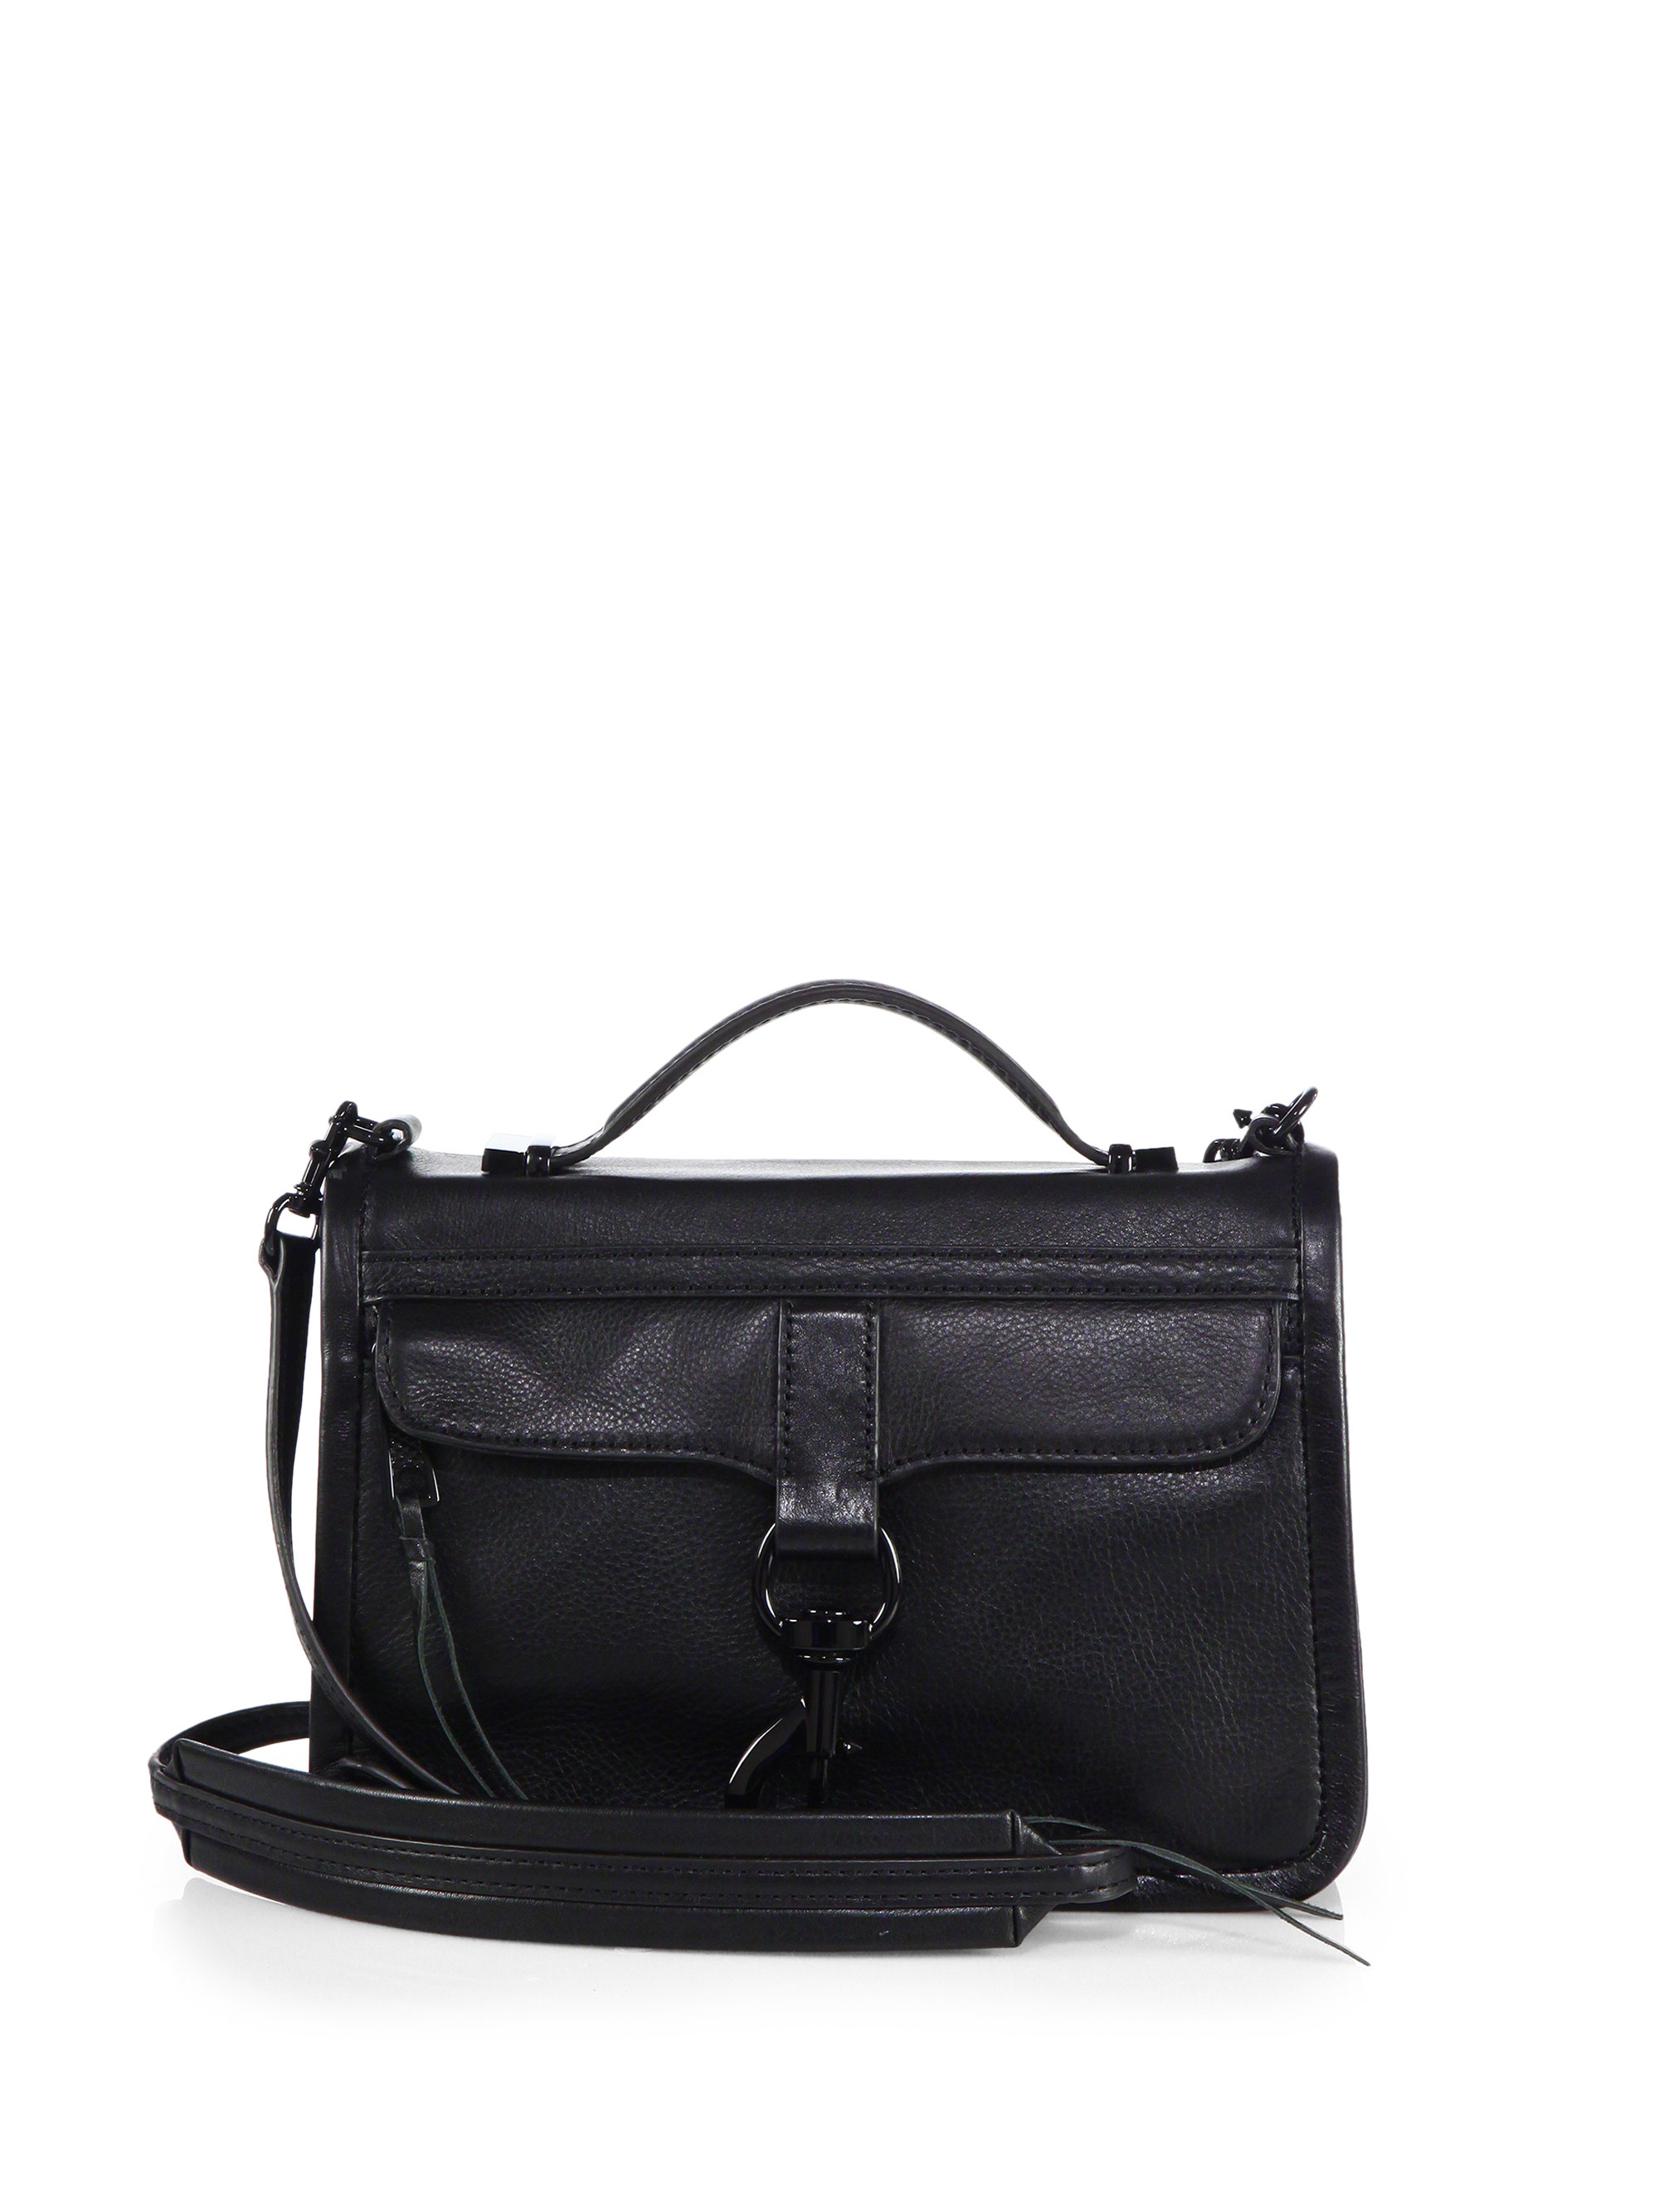 Lyst - Rebecca Minkoff Bowery Shoulder Bag in Black